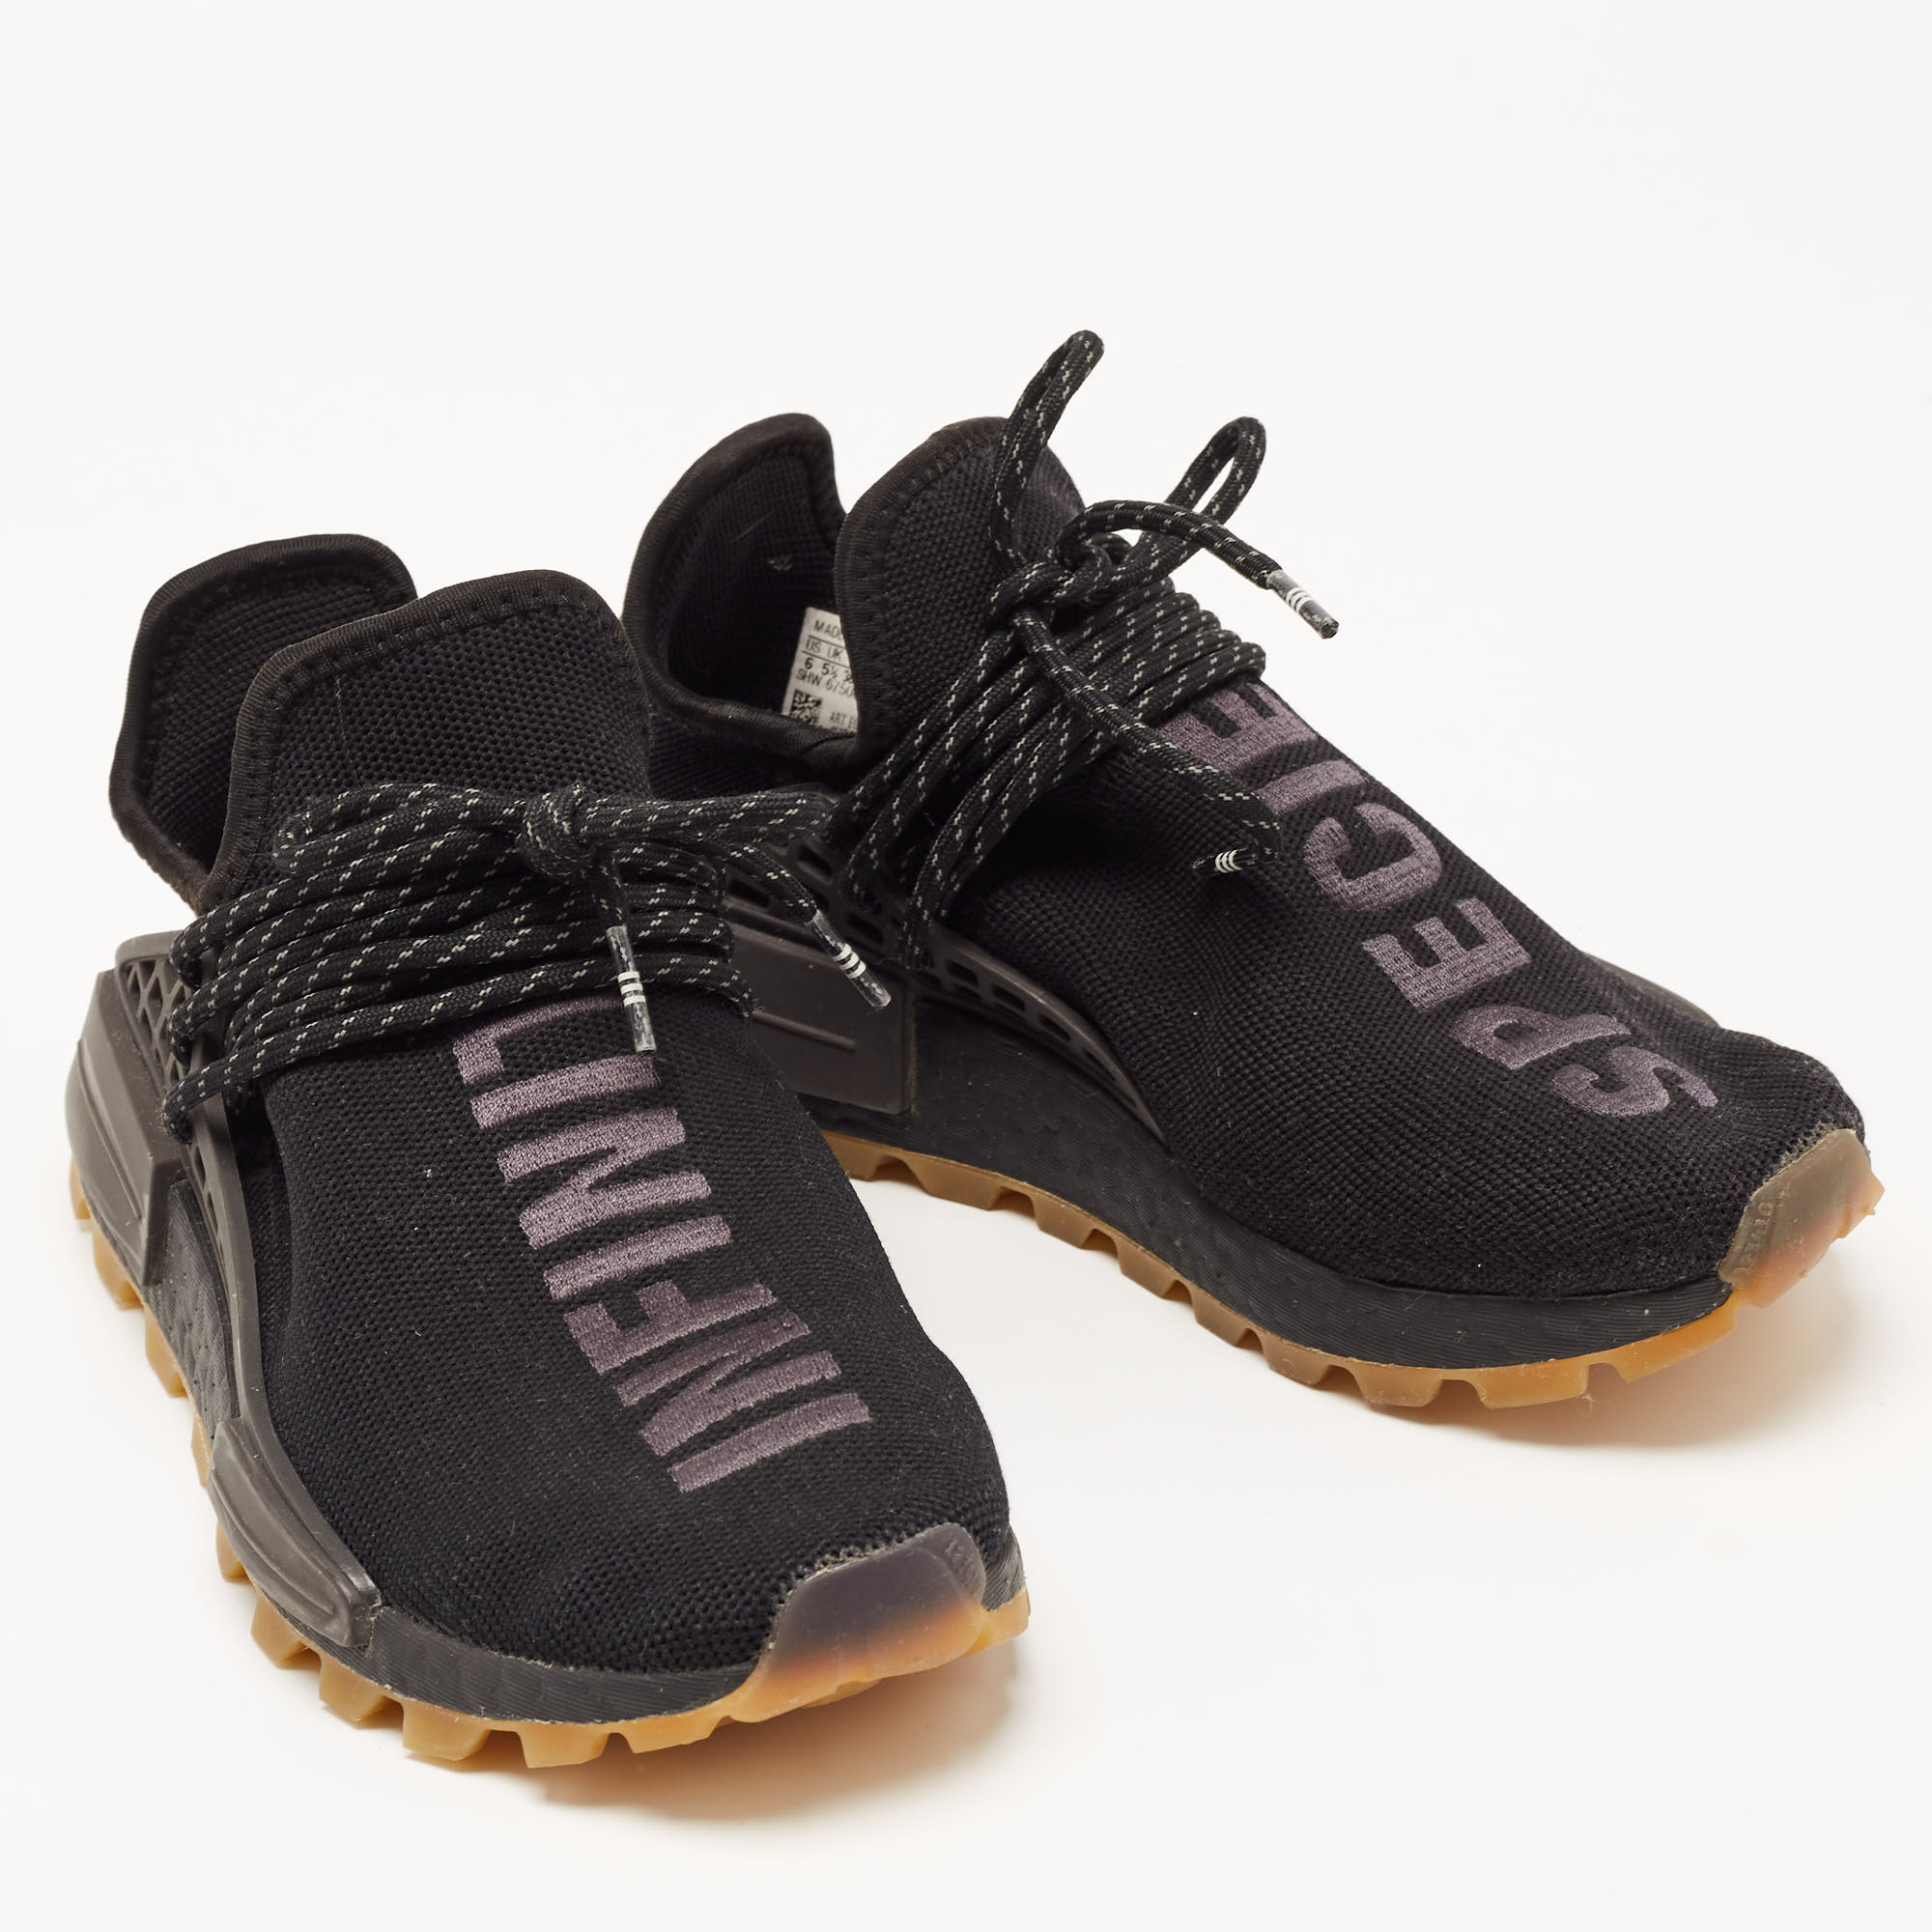 Adidas X Pharell Williams NMD Black Fabric Hu Trail Holi Low Top Sneakers Size 38.5